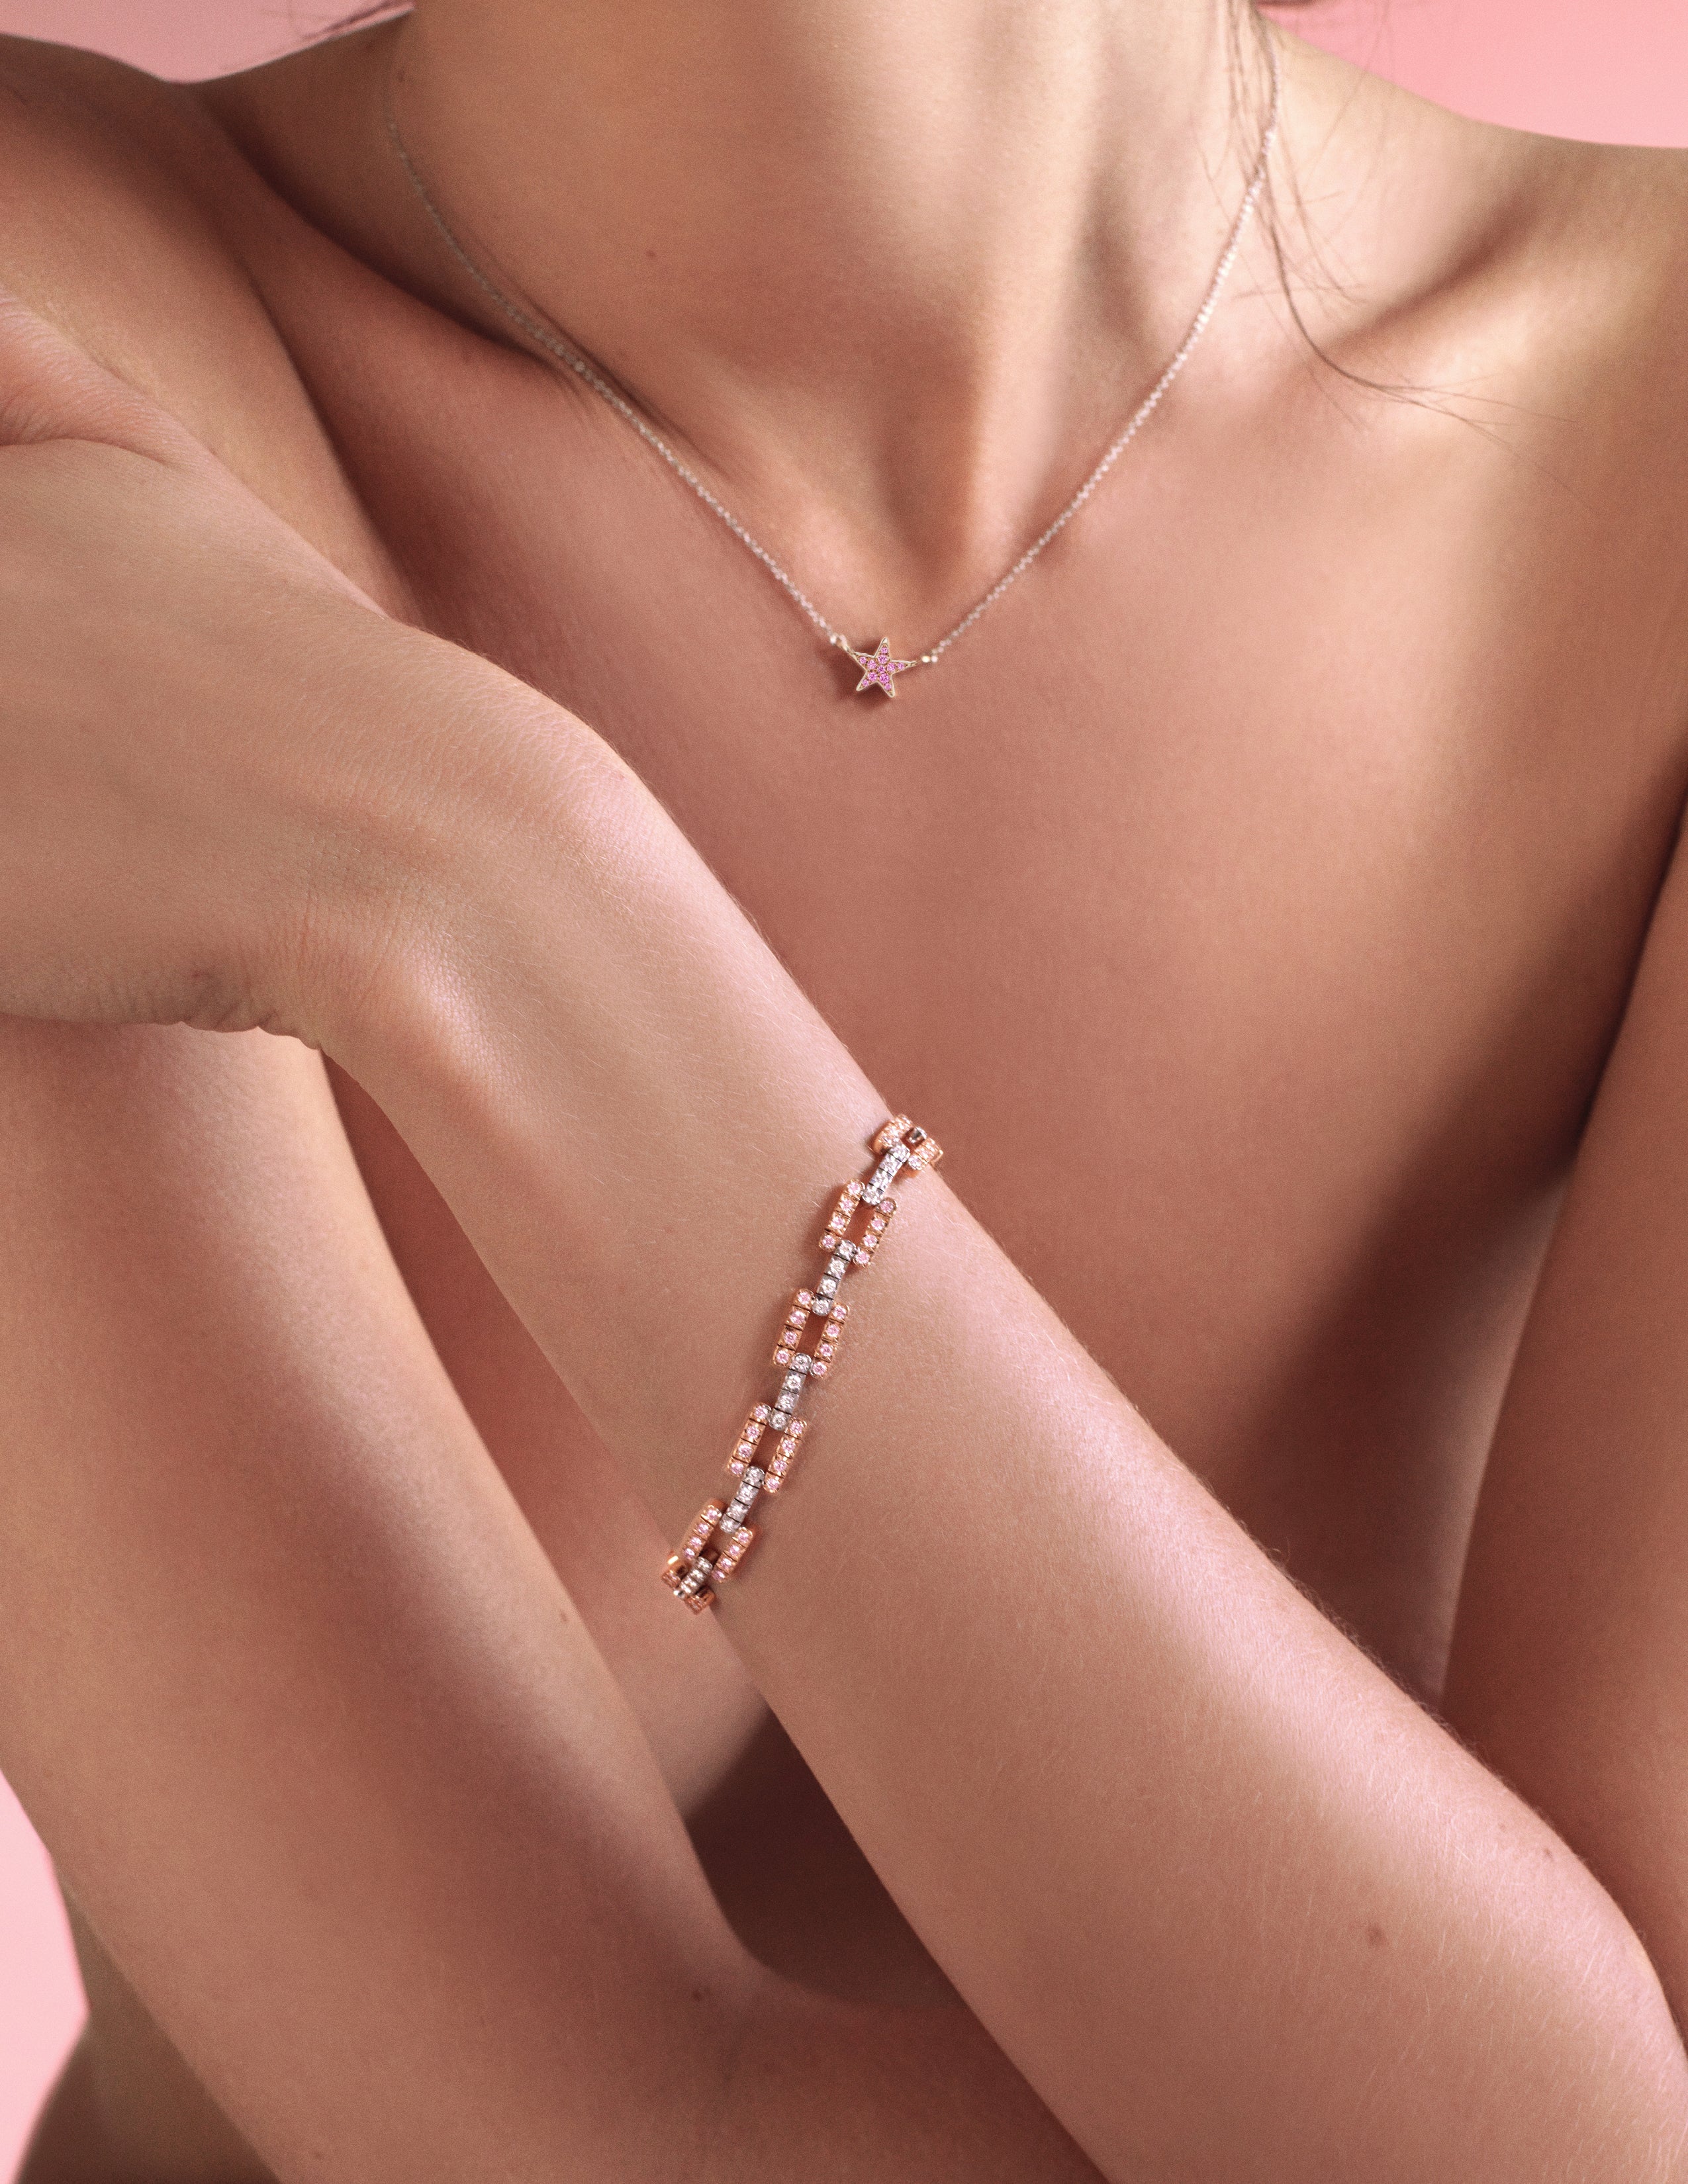 Argyle pink diamond Link bracelet by J F I N E  worn by fashion model